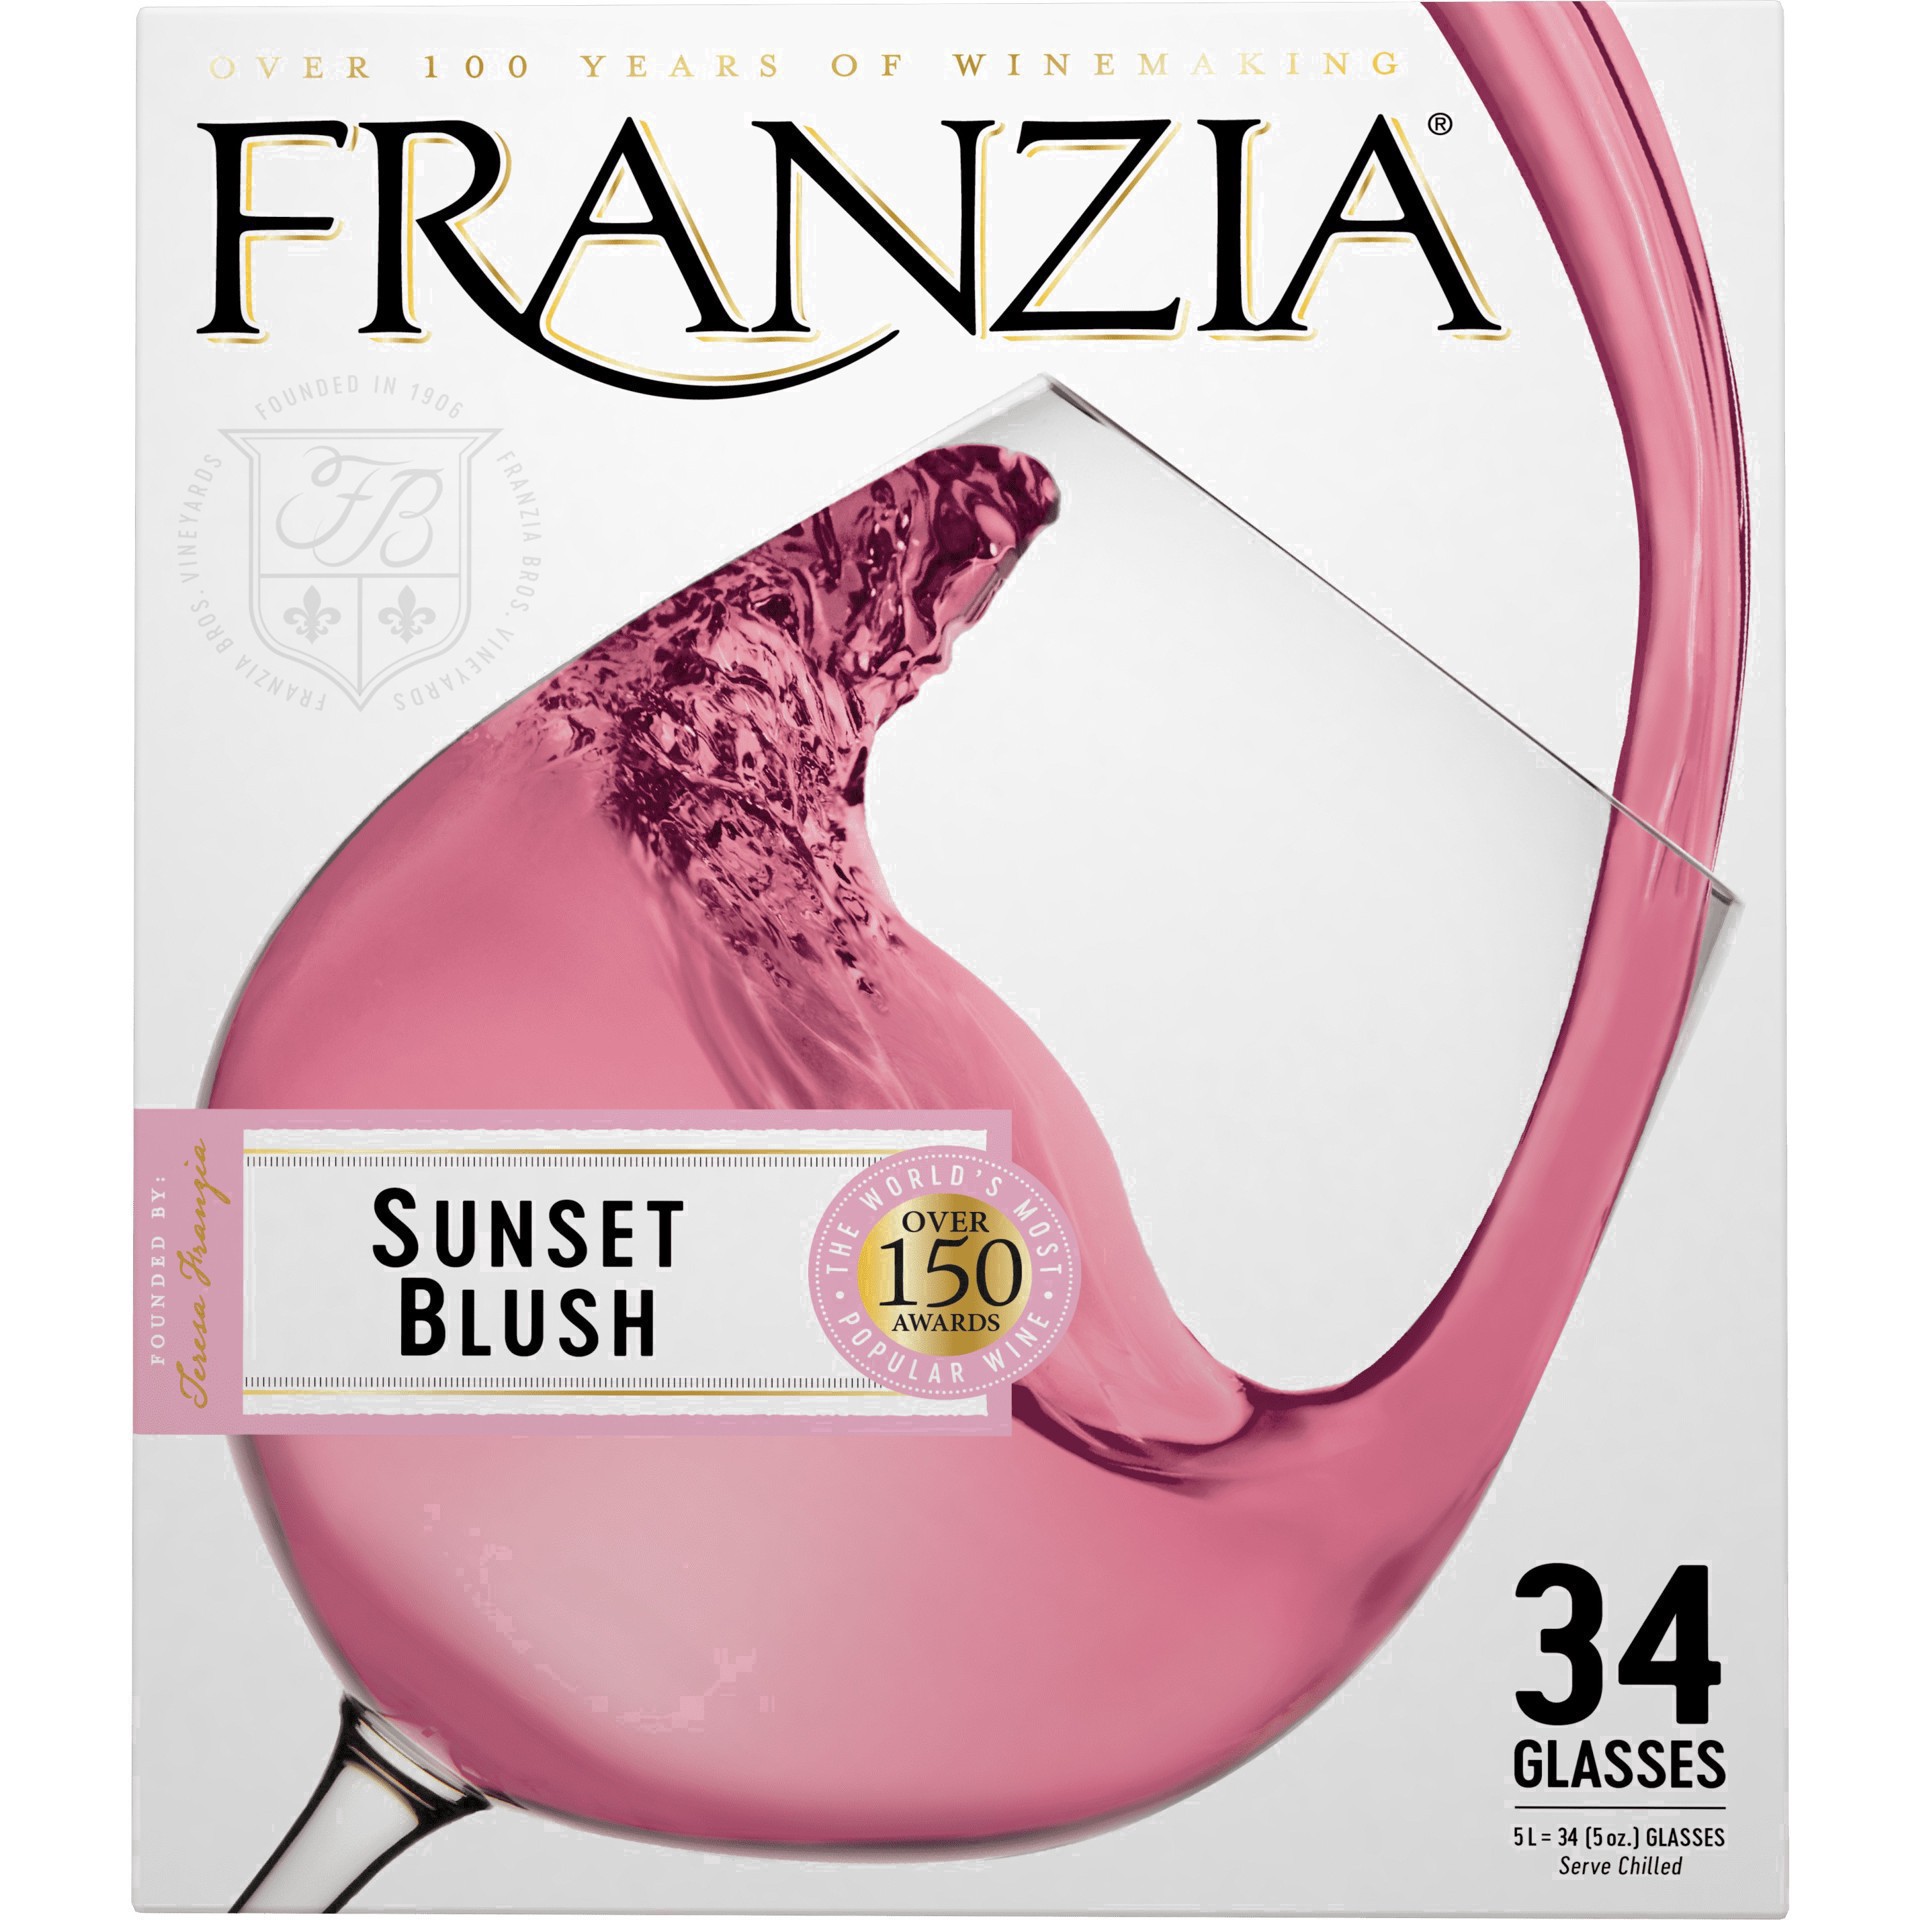 slide 3 of 27, Franzia Sunset Blush Rose Wine - 5L Box, 5 liter